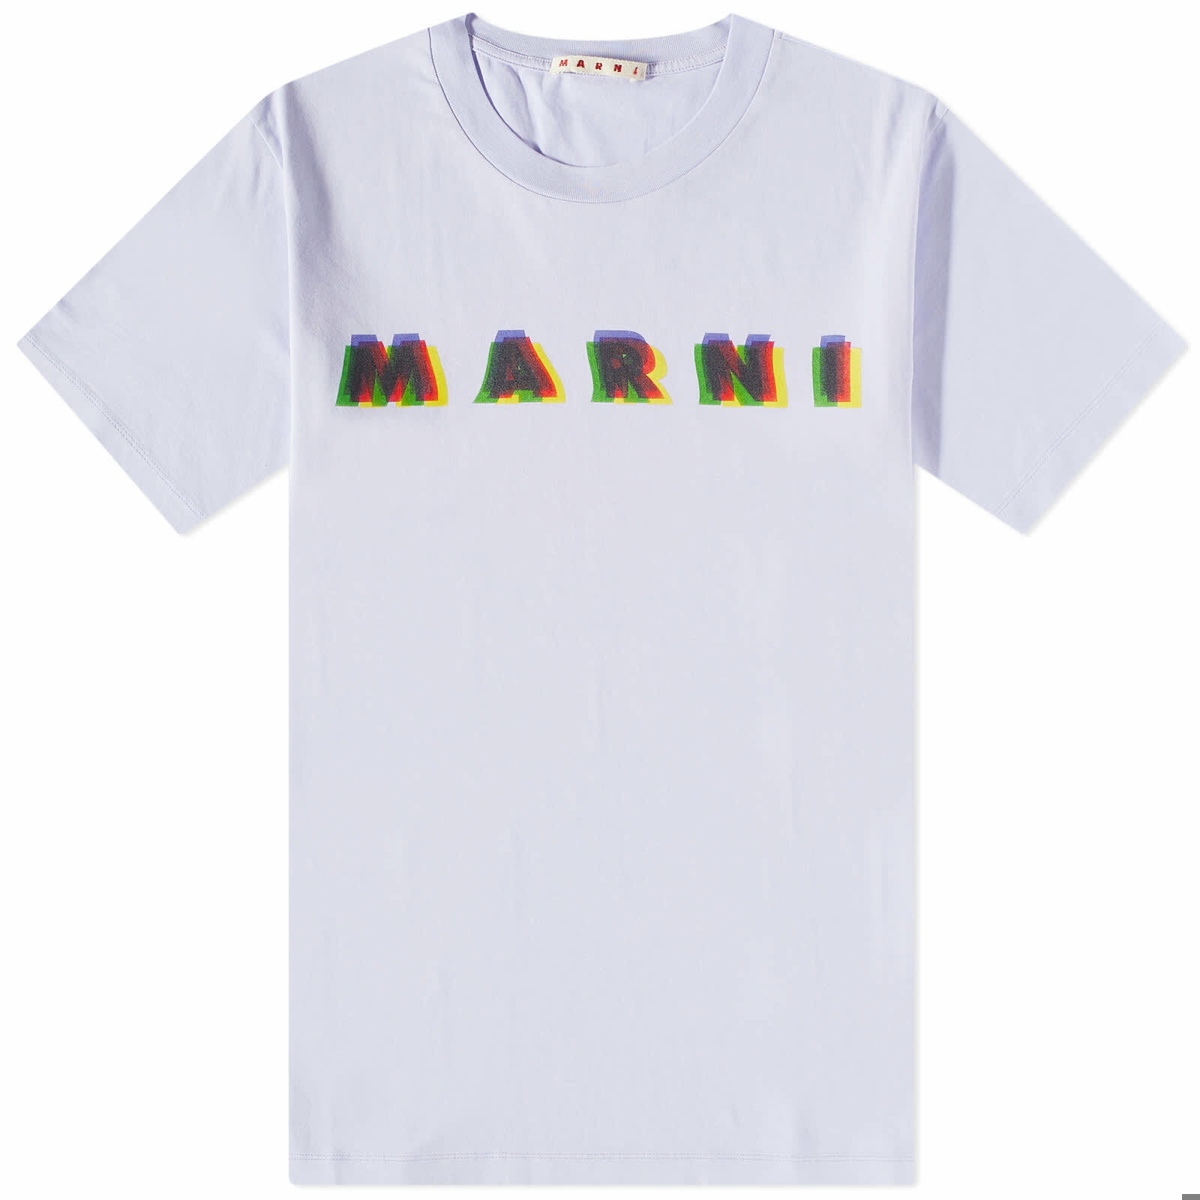 Marni Men's Logo T-Shirt in Thistle Marni